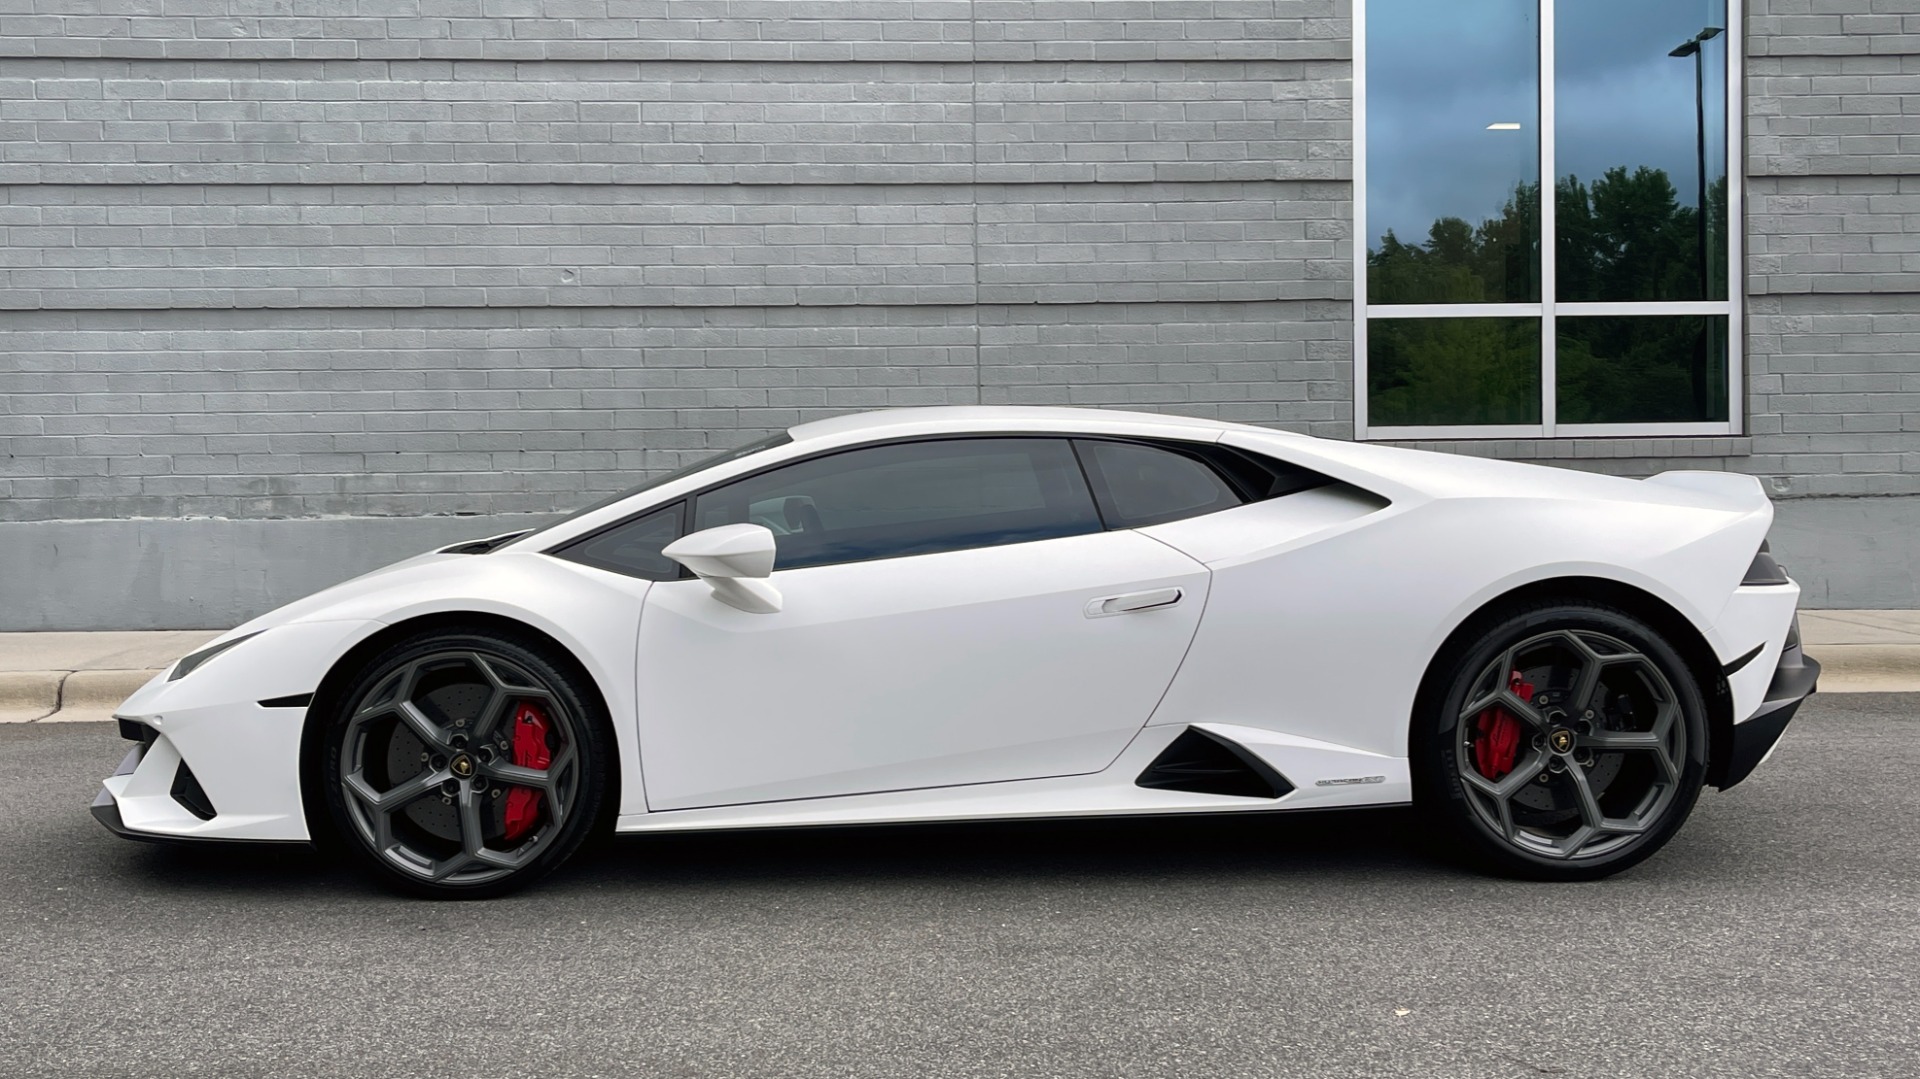 Used 2020 Lamborghini HURACAN EVO LP640-4 5.2L V10 630HP / 7-SPD AUTO / AWD / NAVIGATION / CAMERA for sale $339,000 at Formula Imports in Charlotte NC 28227 4